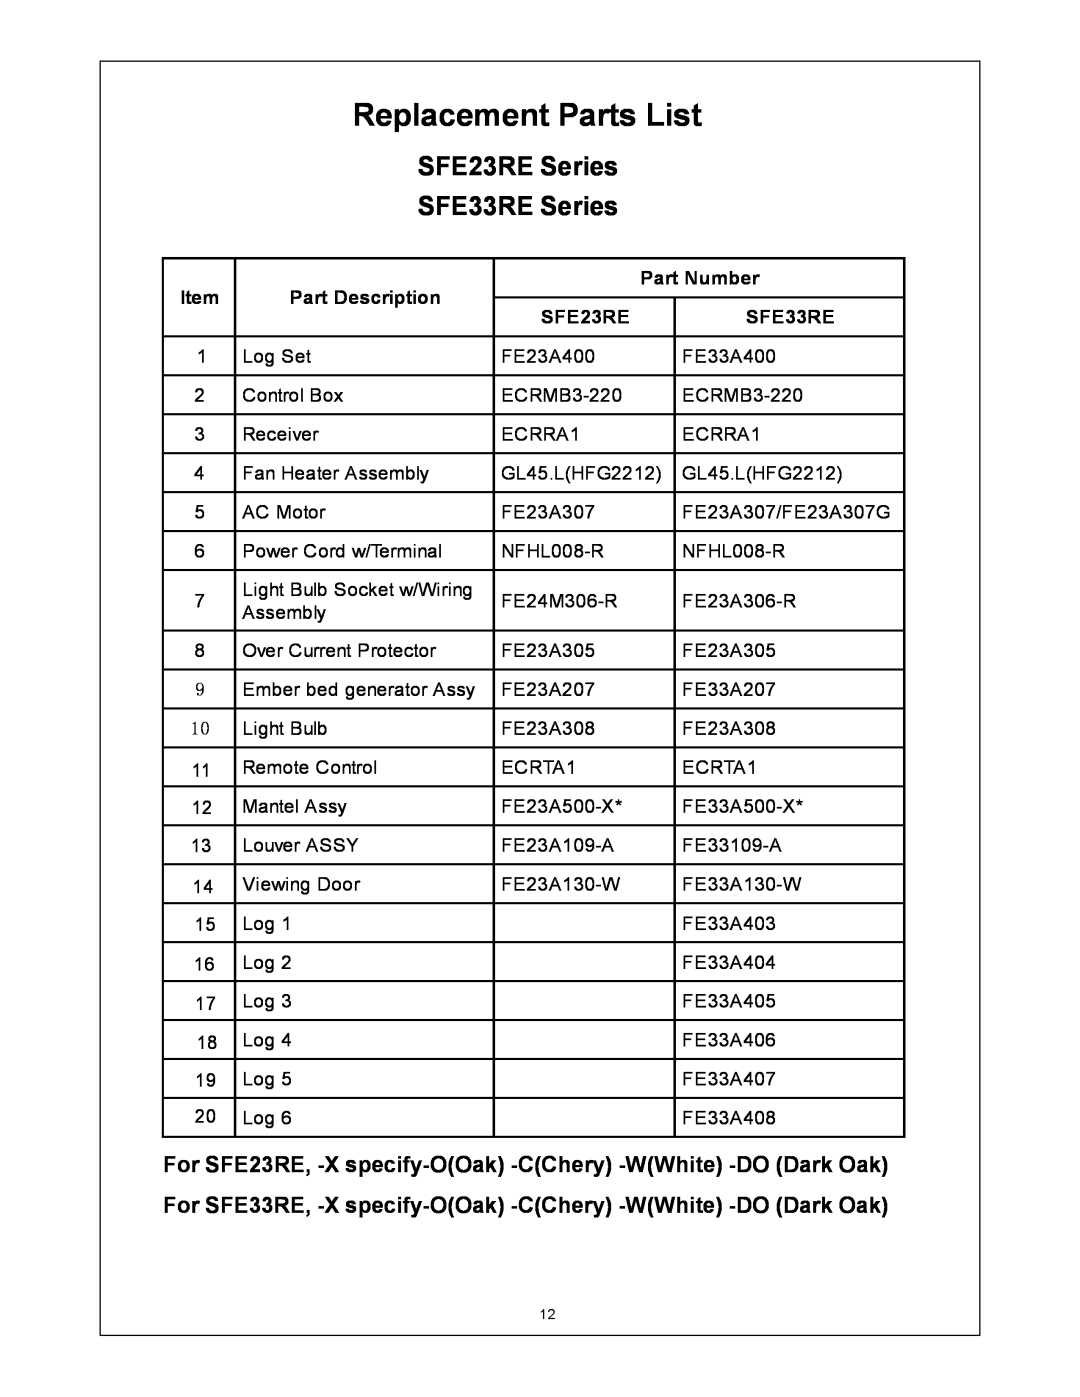 Procom installation instructions Replacement Parts List, SFE23RE Series SFE33RE Series, Part Description, Part Number 